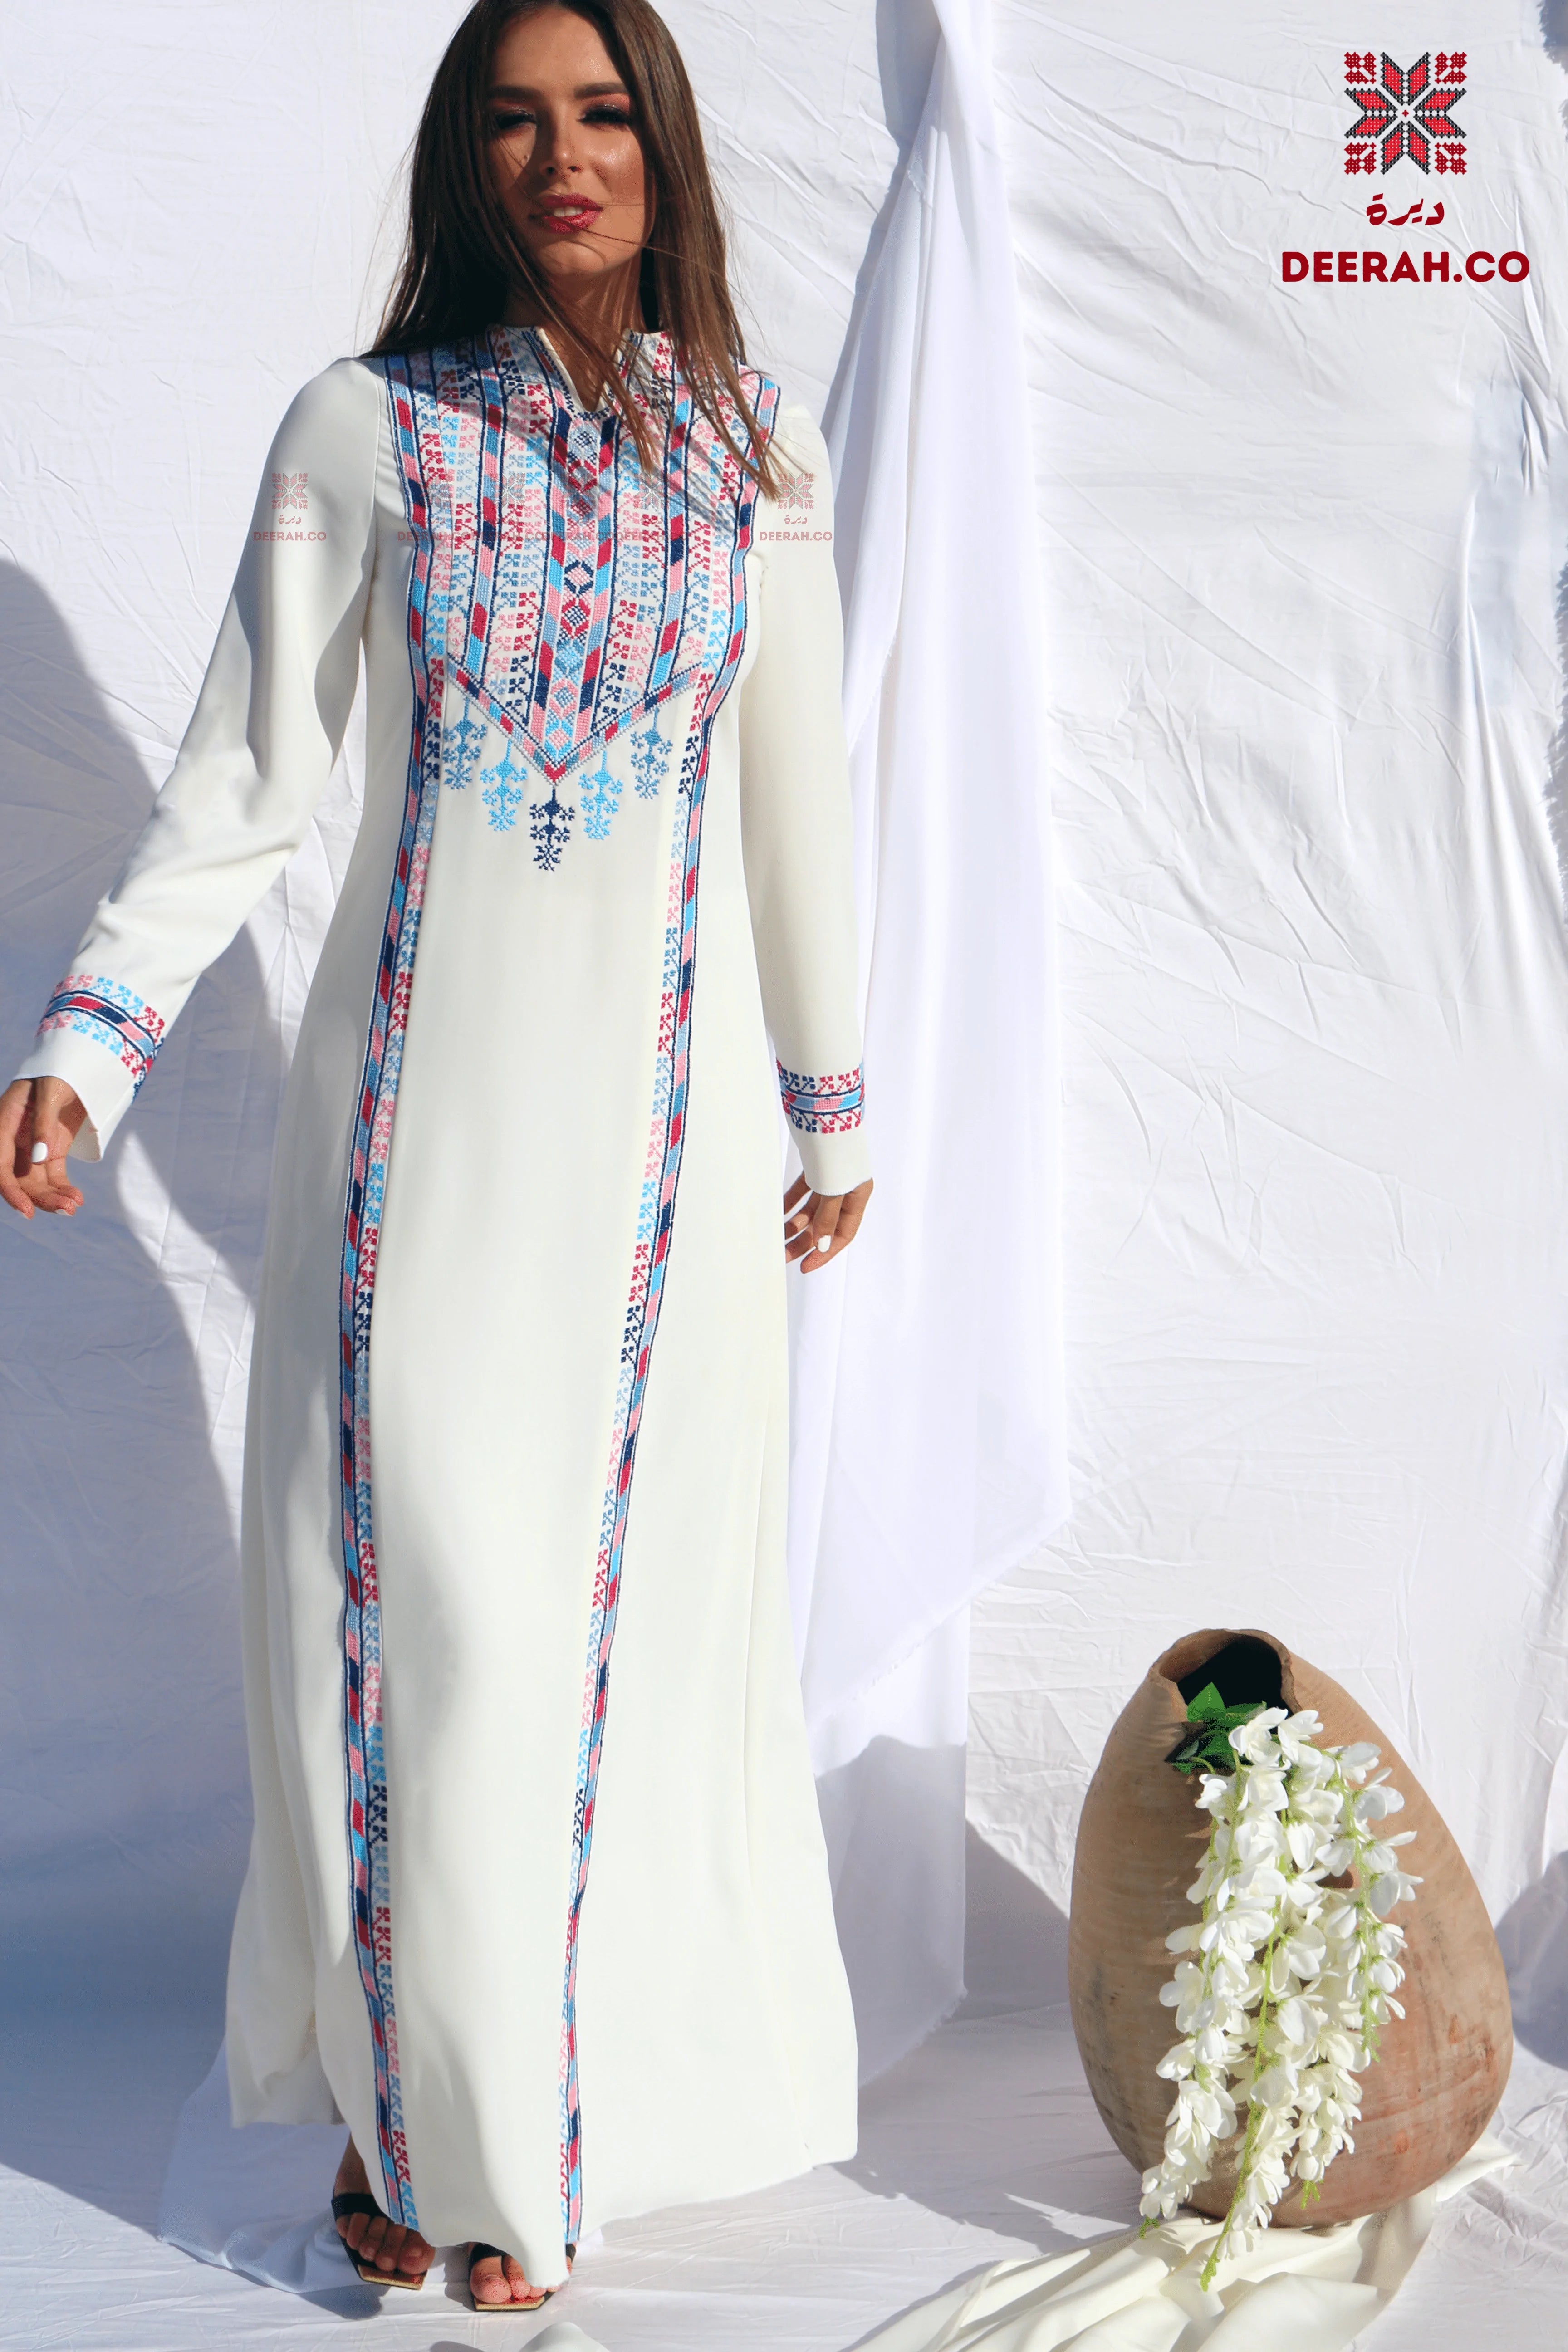 Palestinian Wedding Dresses